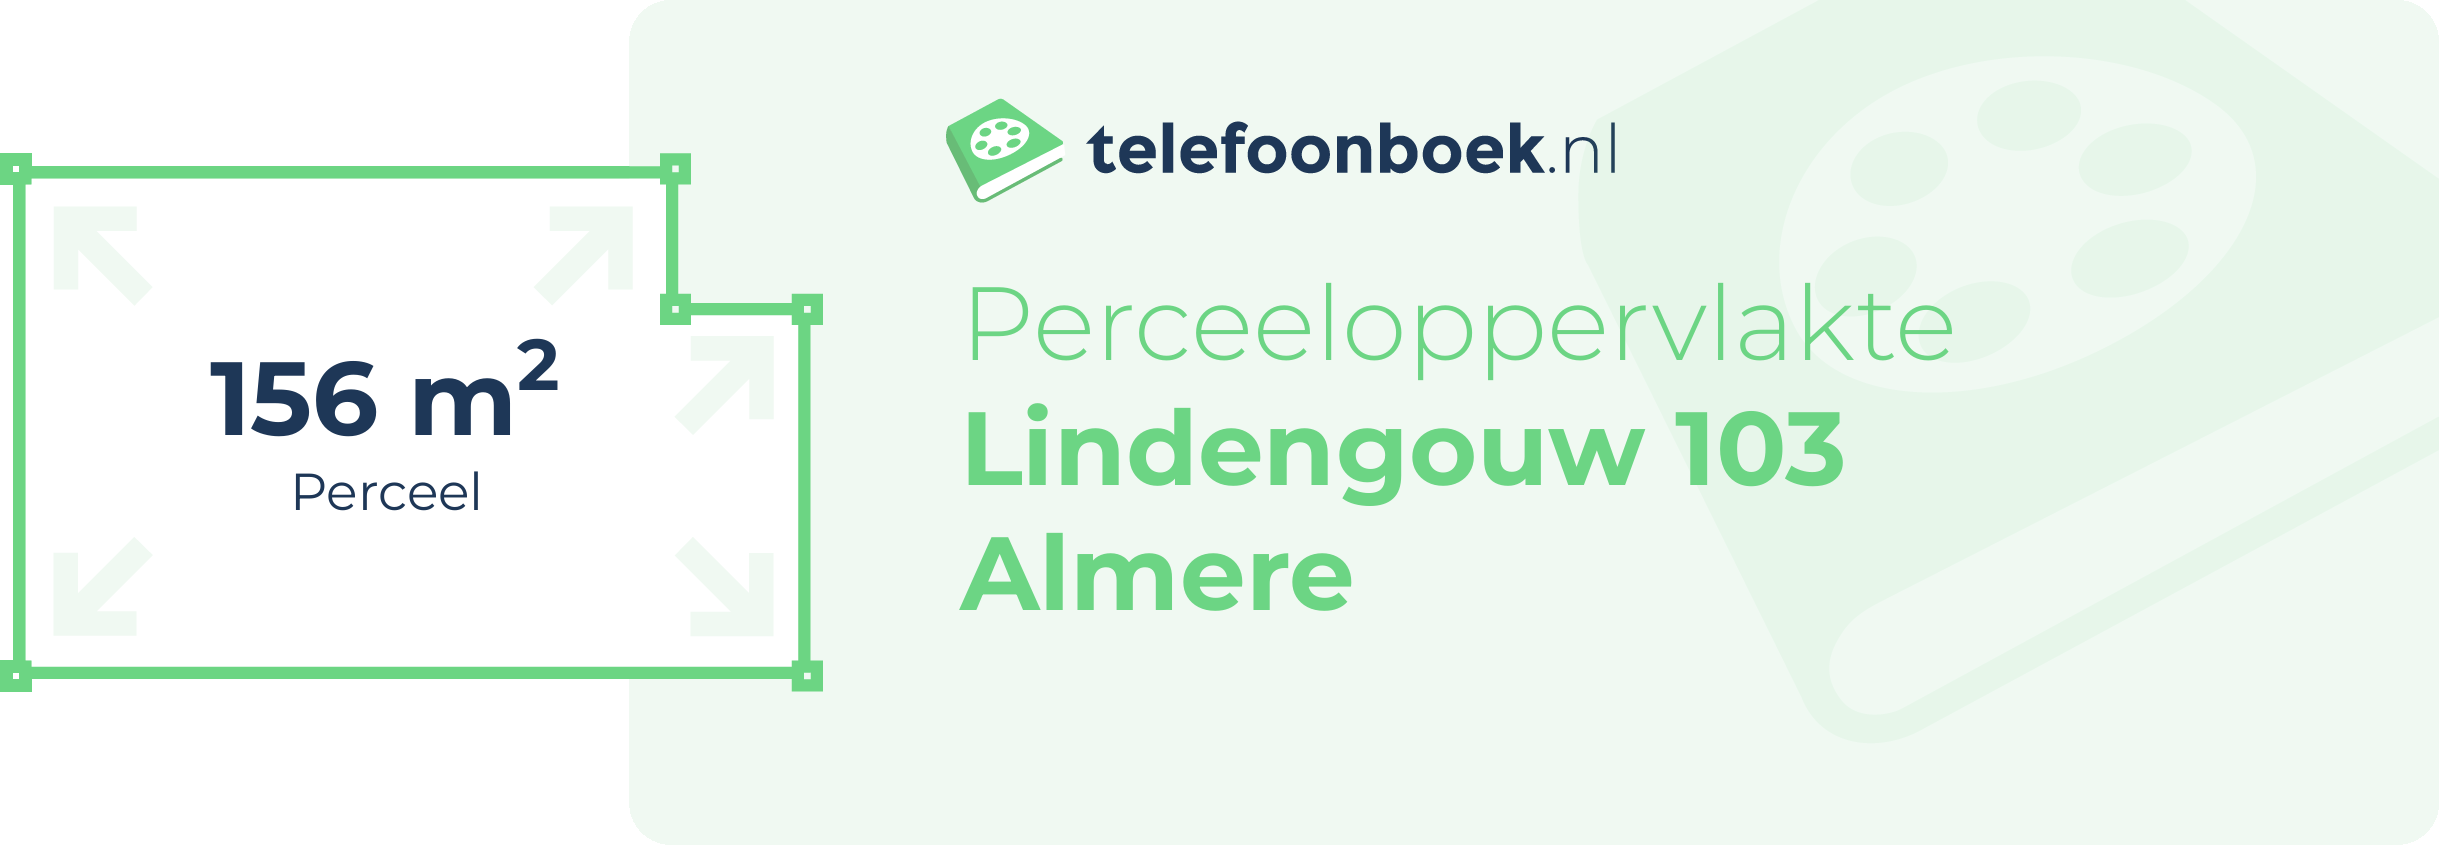 Perceeloppervlakte Lindengouw 103 Almere